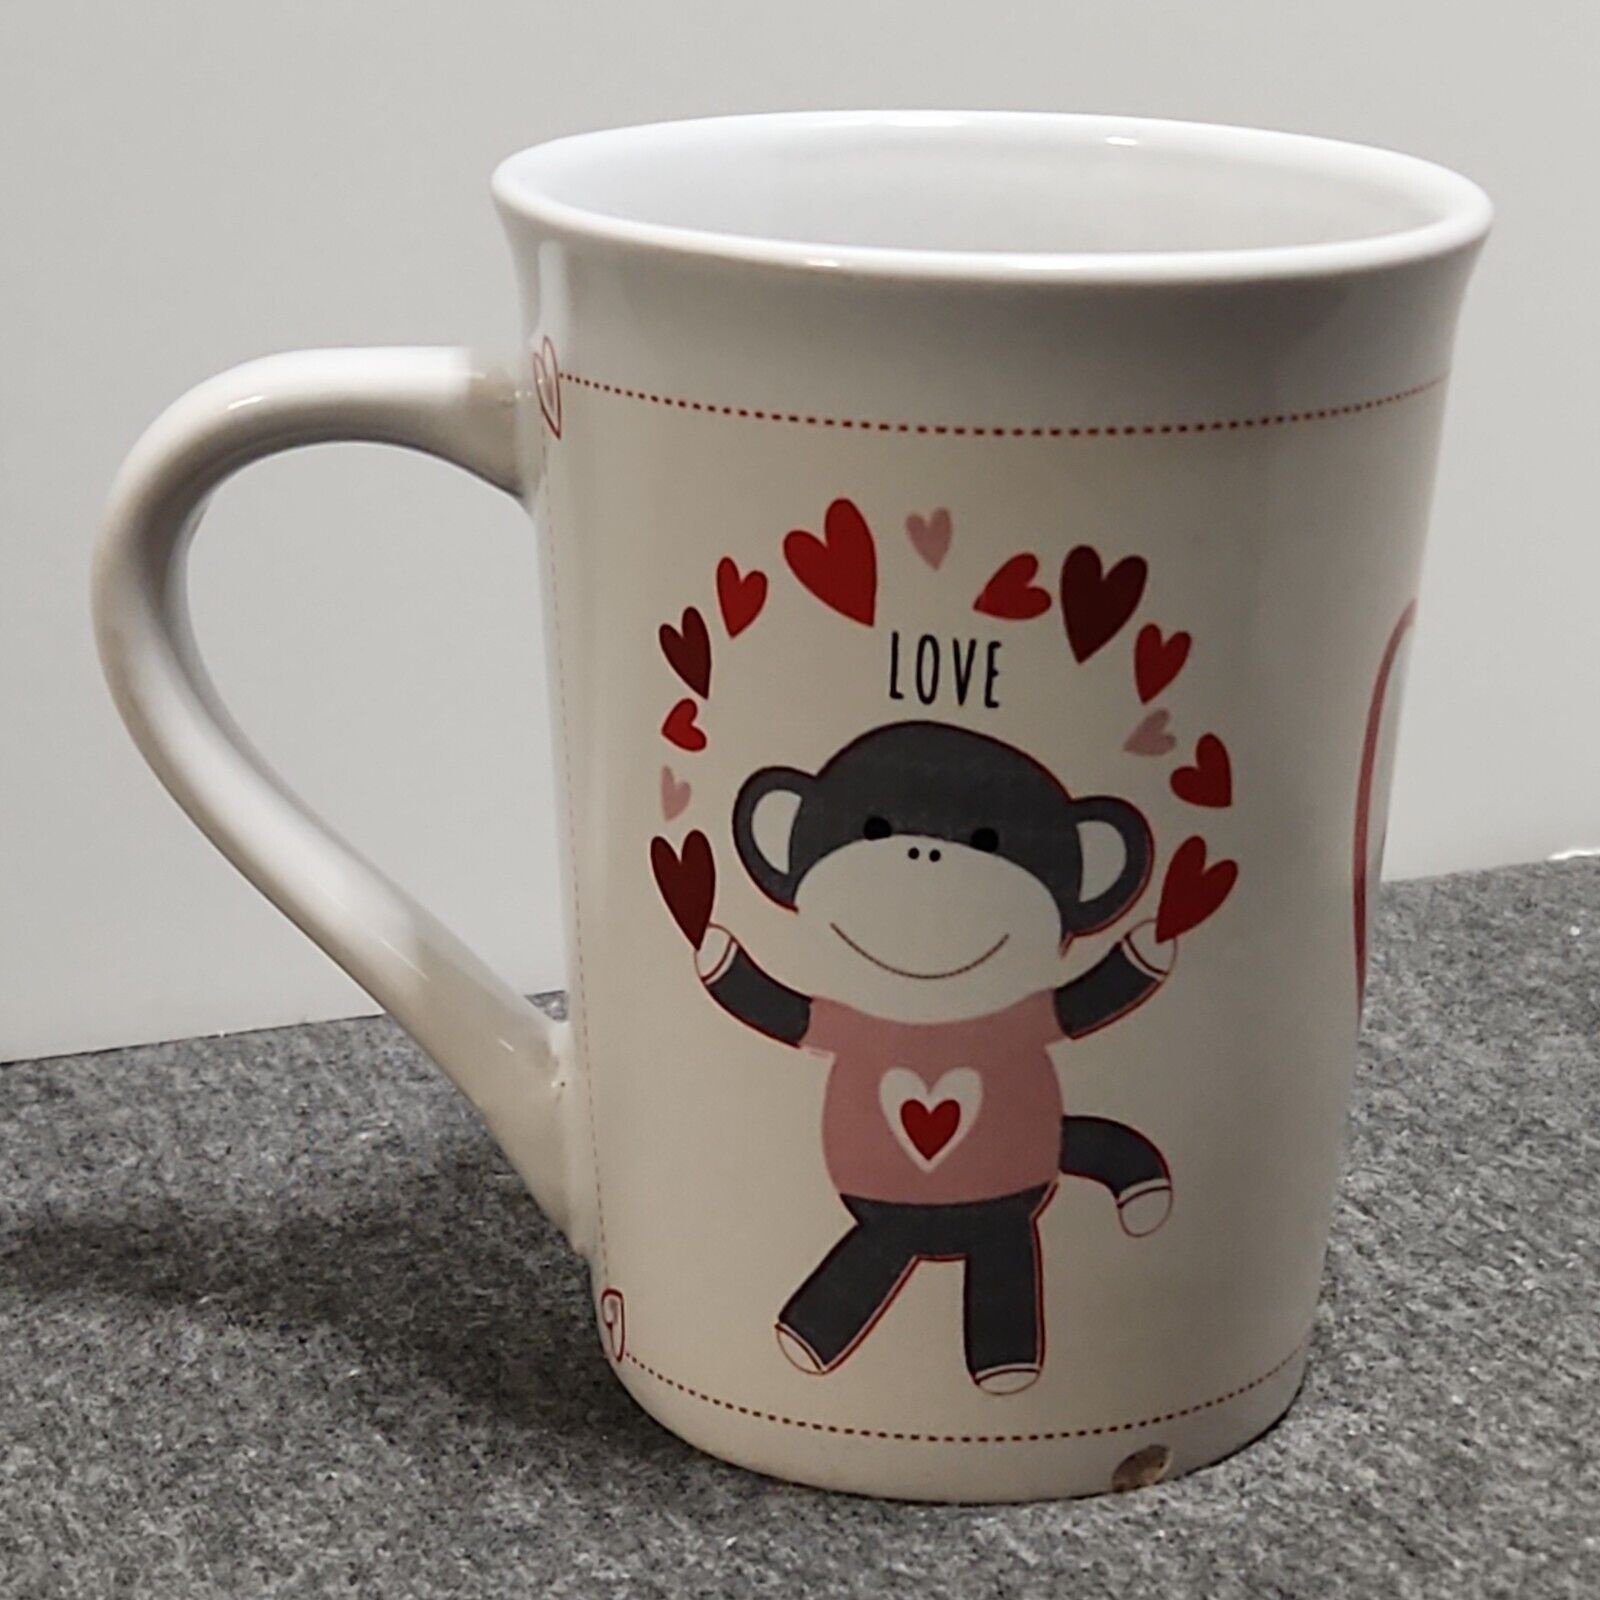 Monkey LOVE Heart Coffee Tea Mug Cute Cup Holds 15 Oz. Royal Norfolk